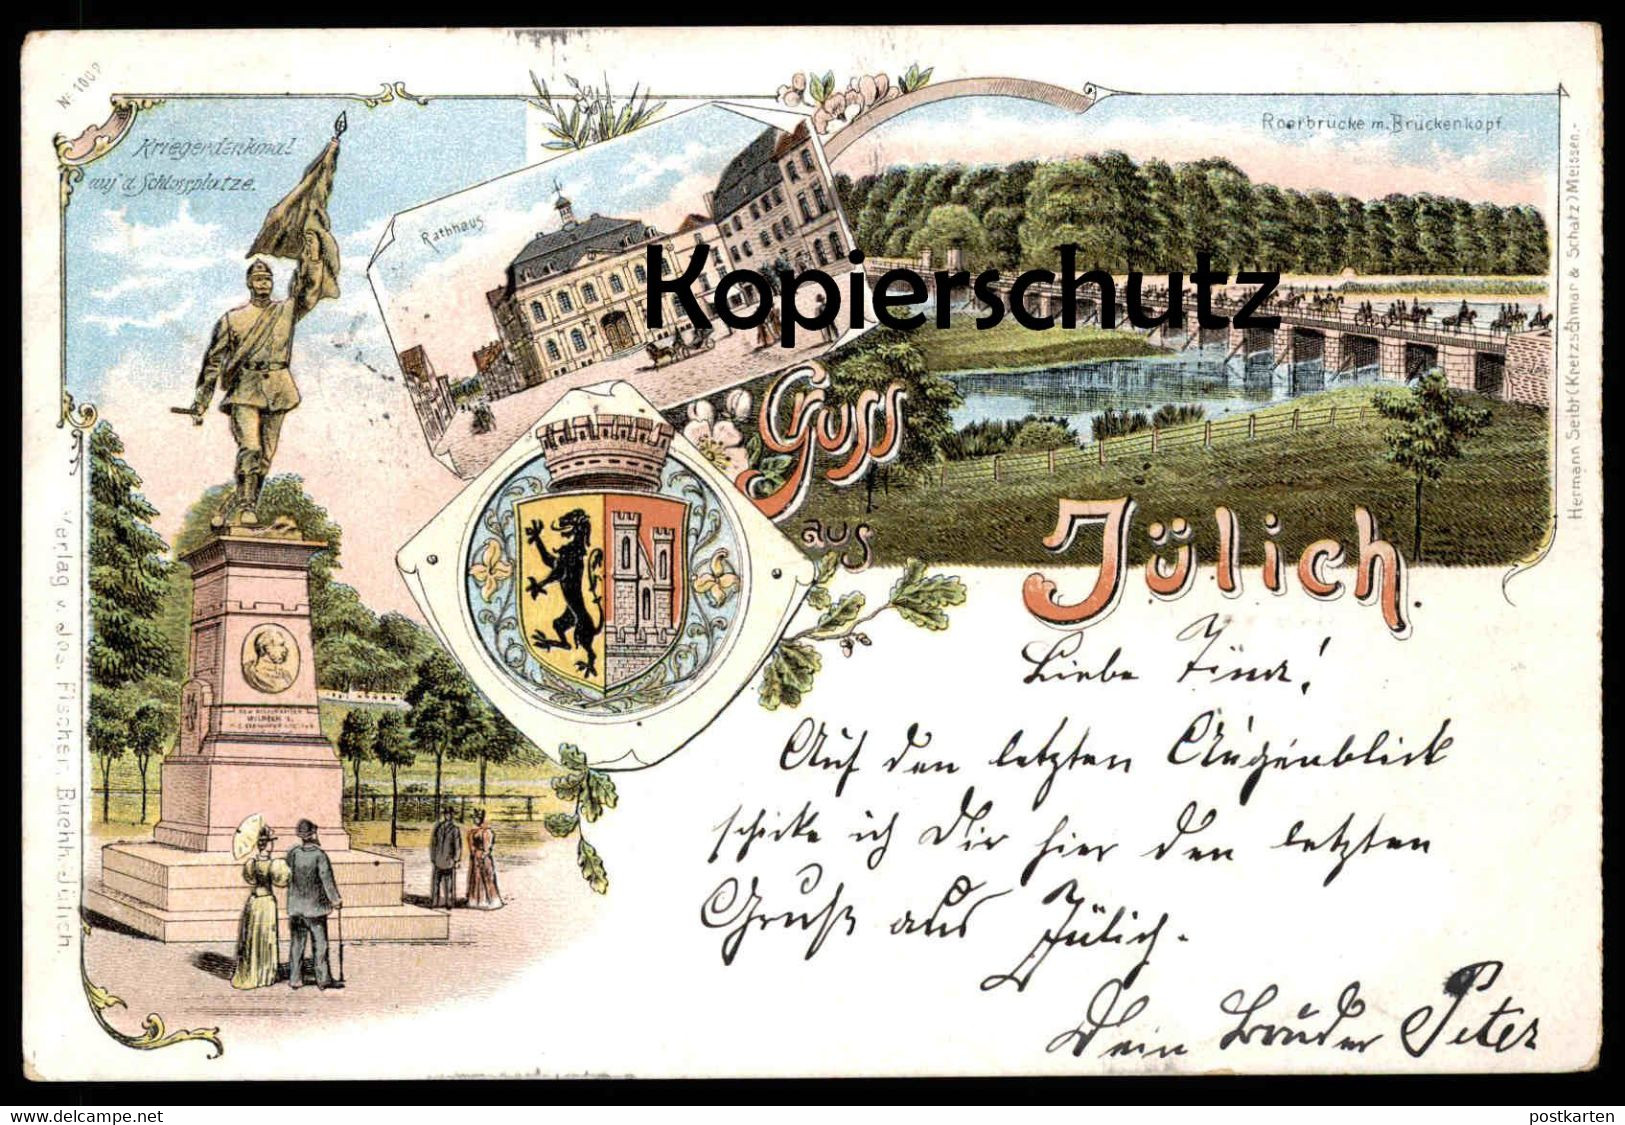 ALTE LITHO POSTKARTE GRUSS AUS JÜLICH 1897 KRIEGERDENKMAL ROERBRÜCKE BRÜCKENKOPF WAPPEN Ansichtskarte AK Cpa Postcard - Juelich